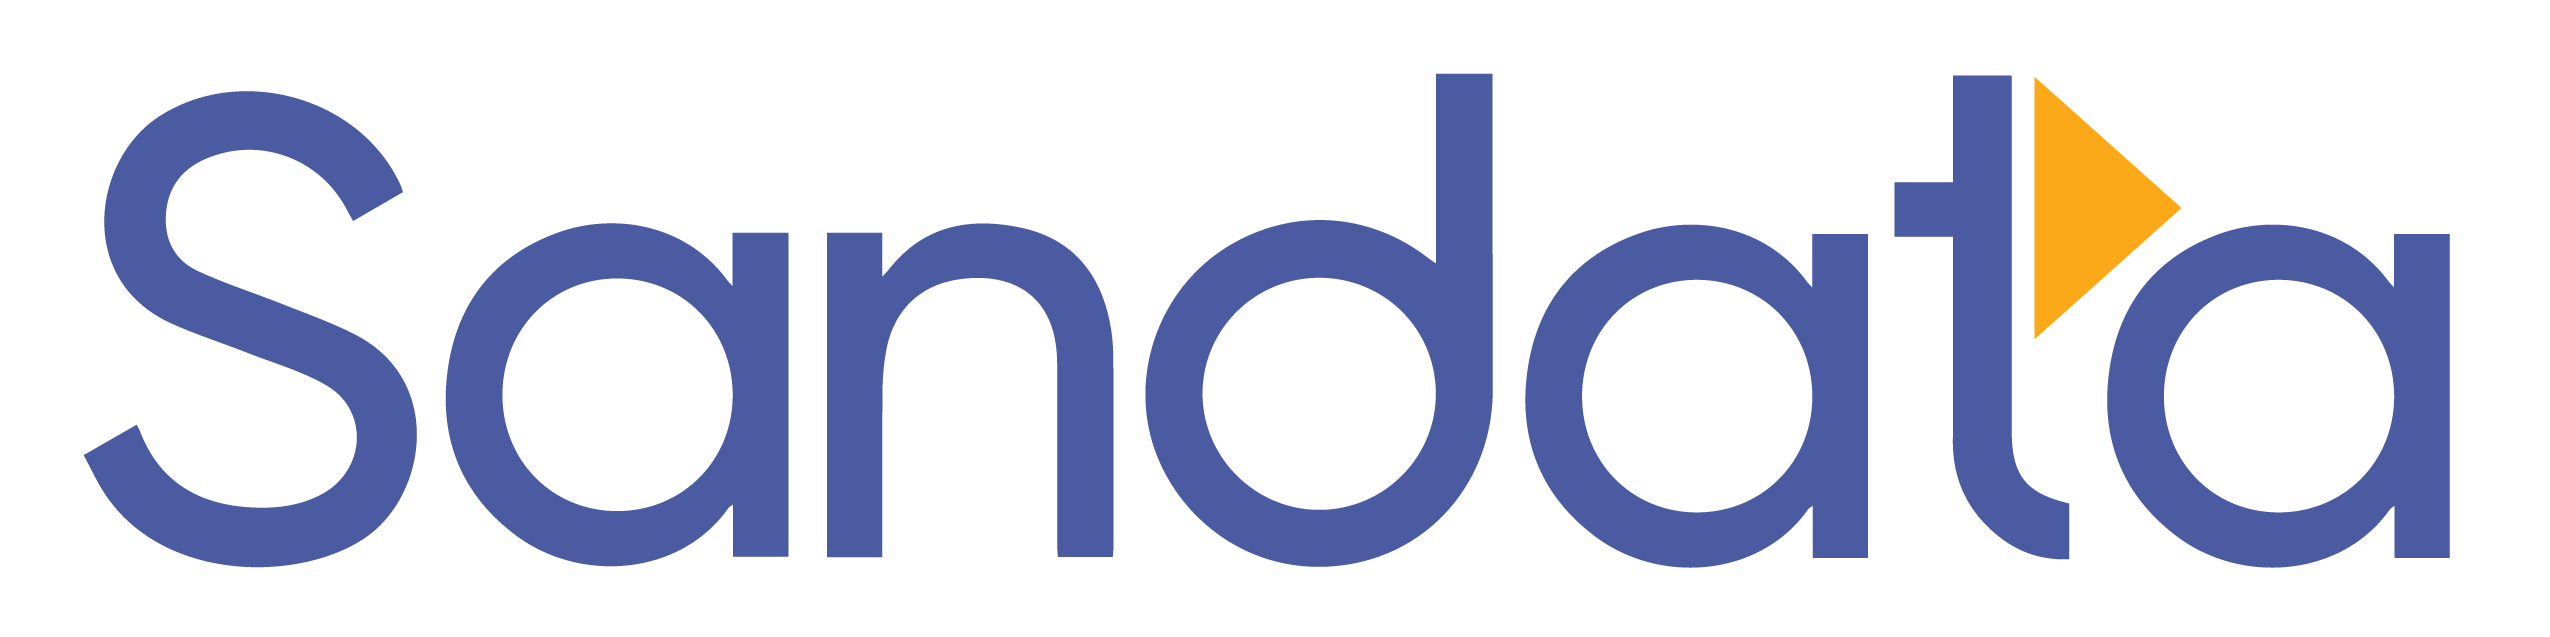 Sandata logo